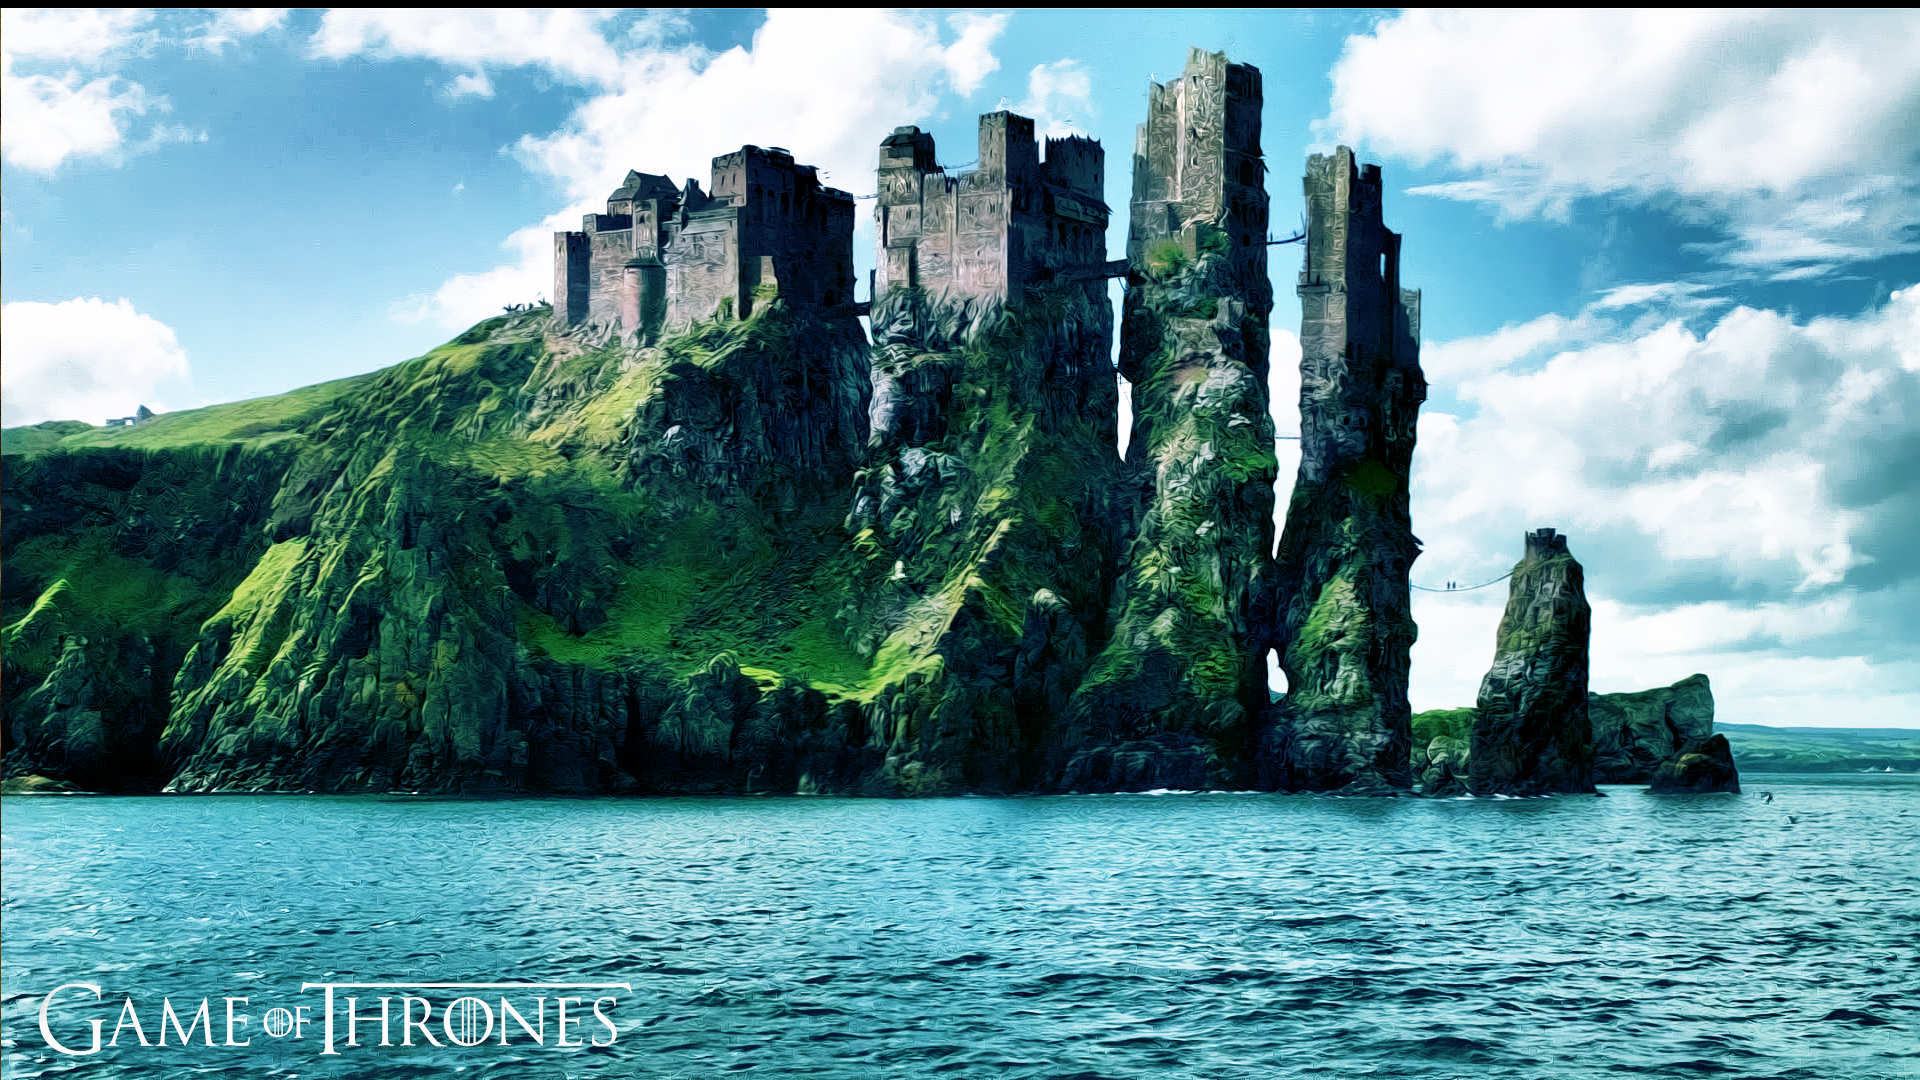 Game of Thrones Desktop Wallpapers - Wallpaper, High Definition, High